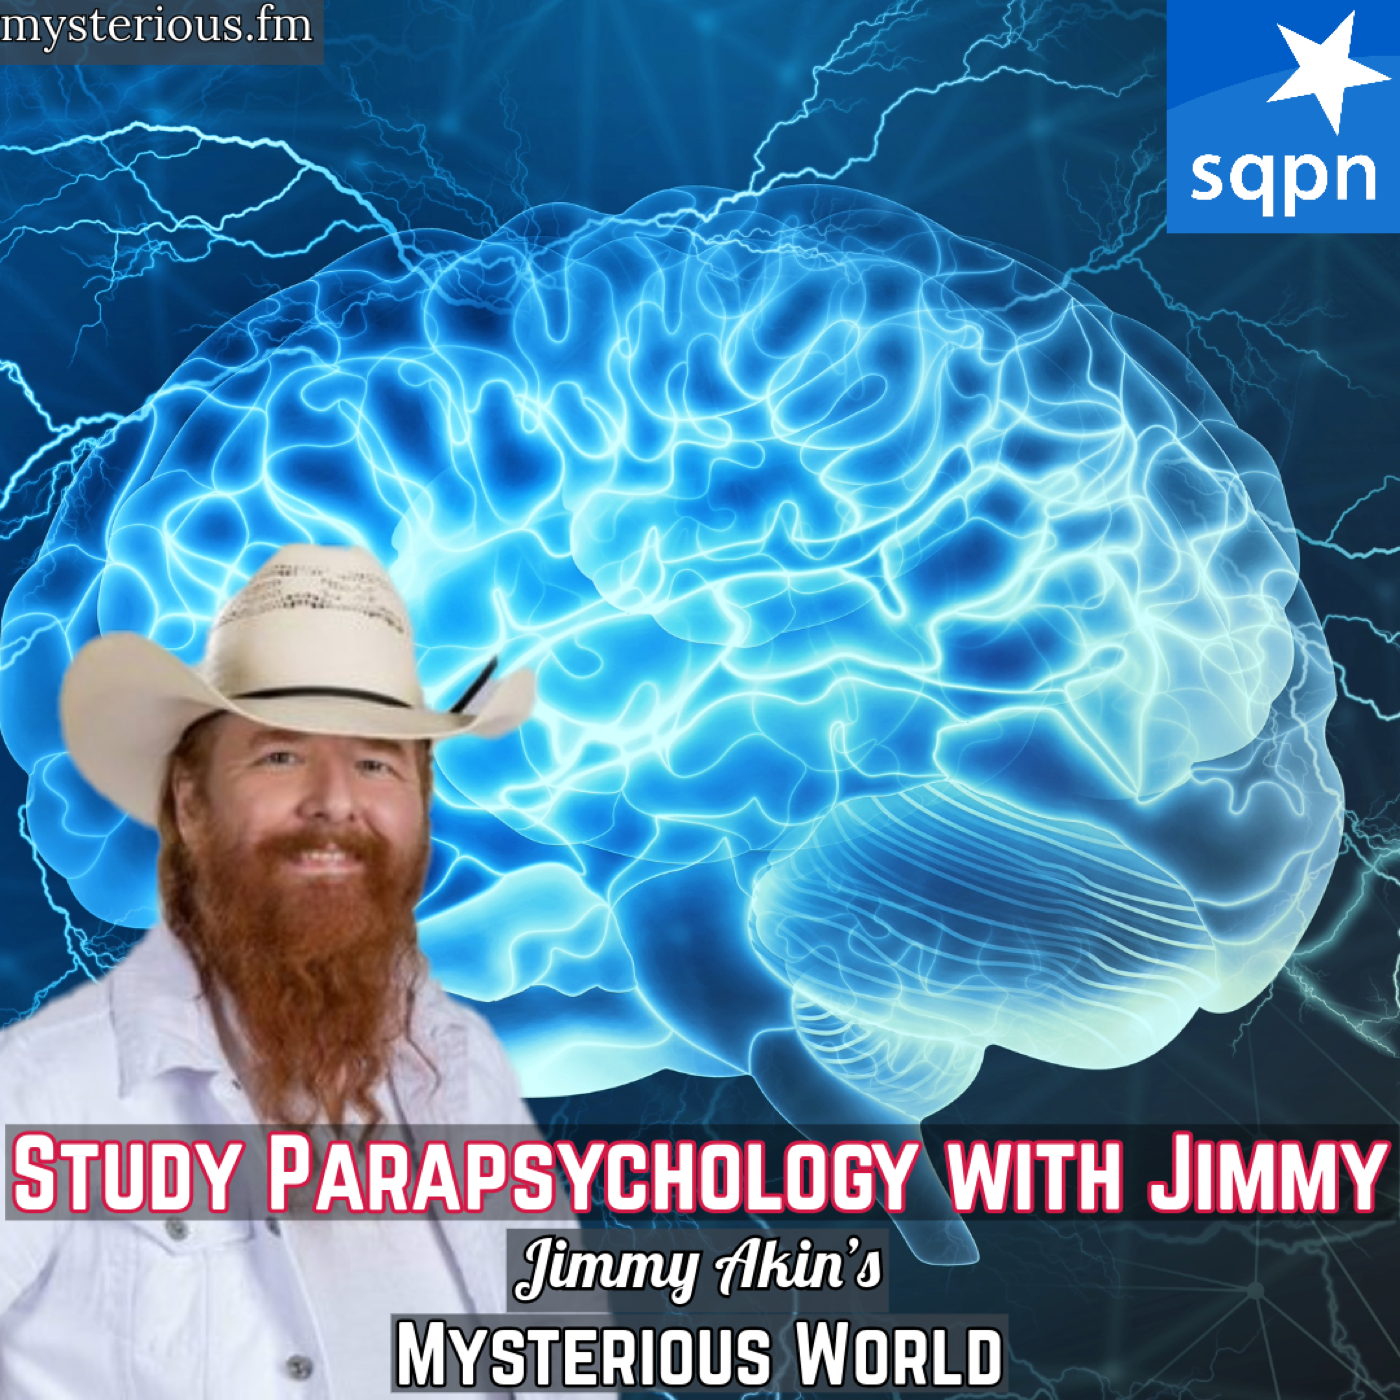 Study Parapsychology with Jimmy Akin